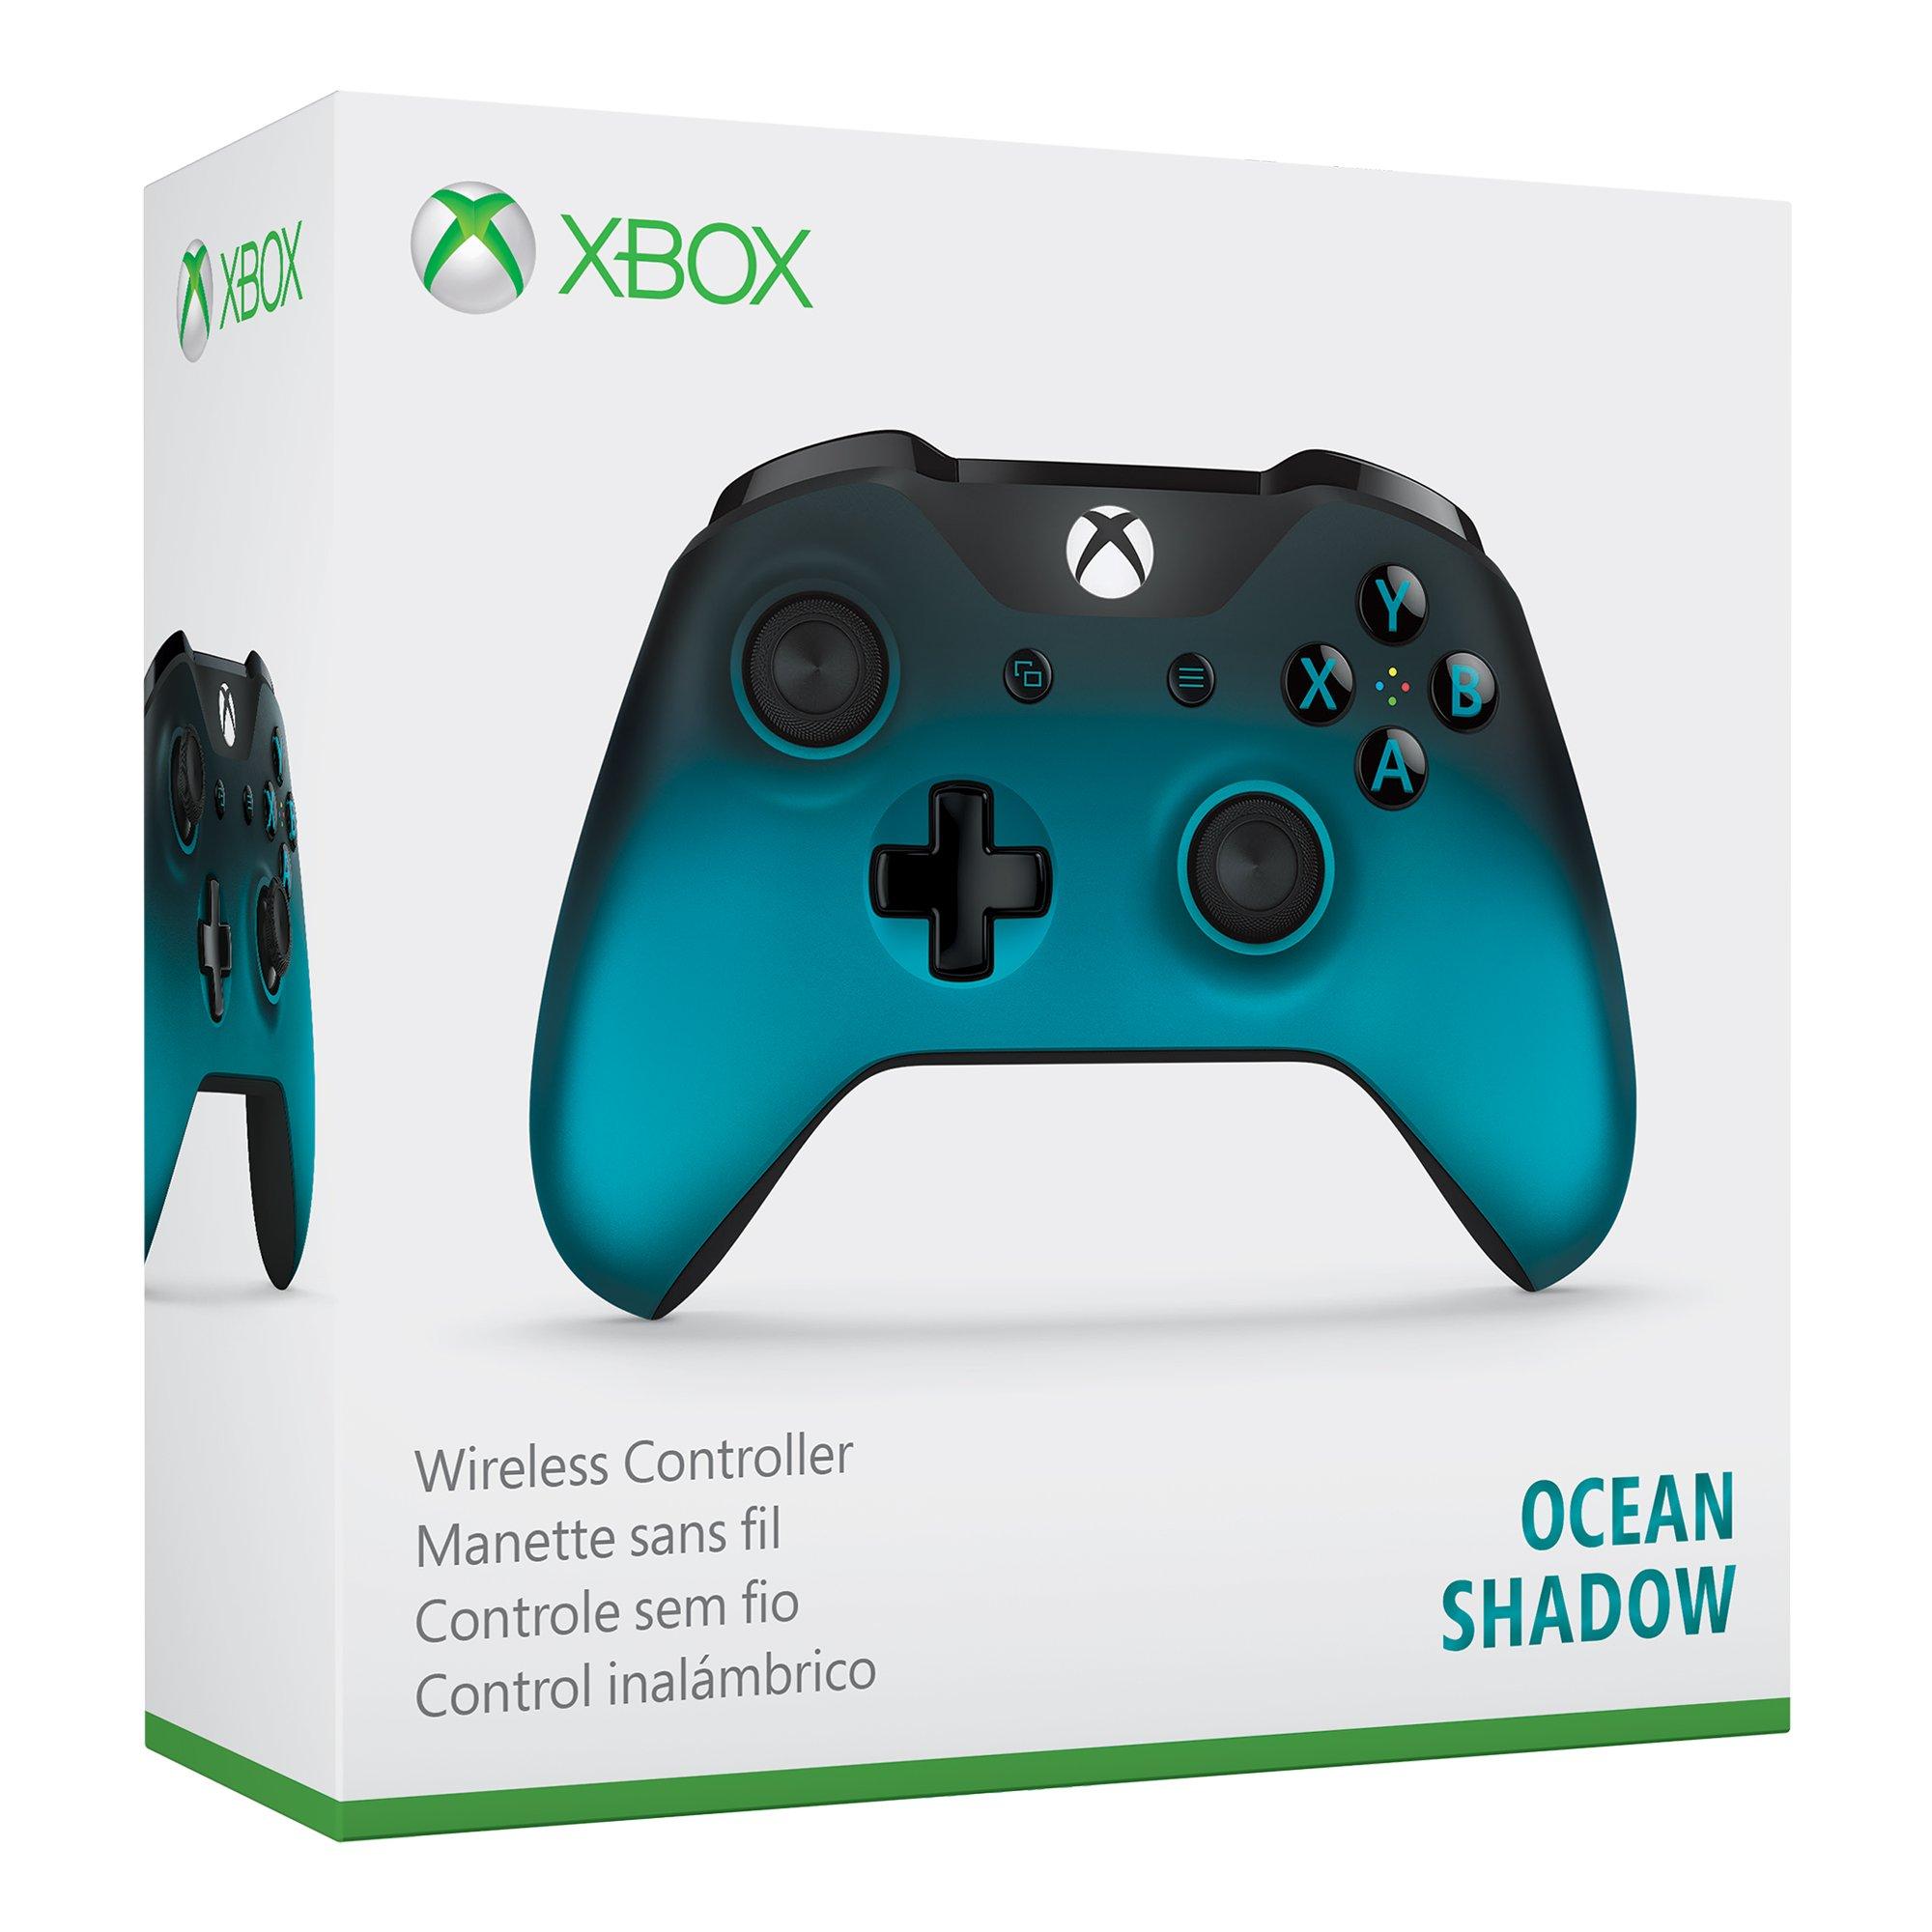 Microsoft Xbox One Ocean Shadow Special 